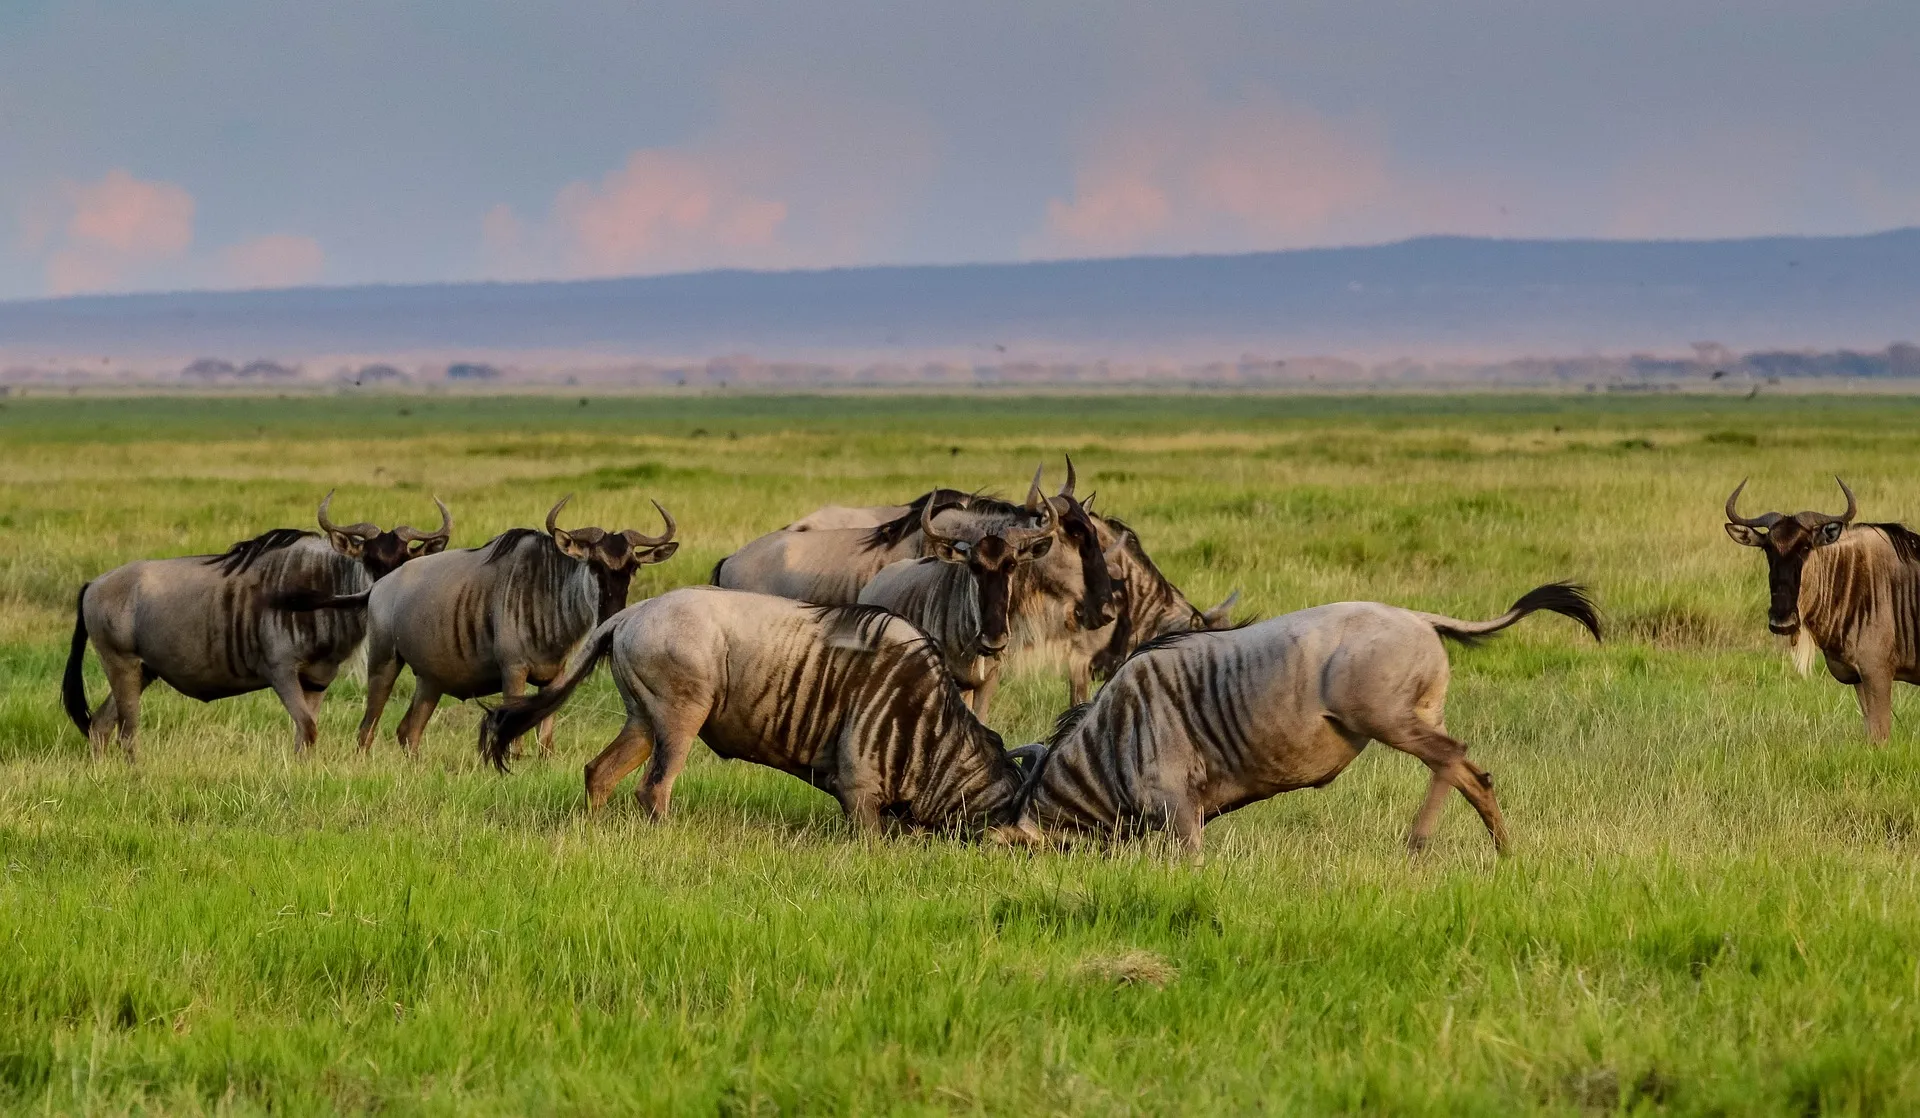 Wildebeest fighting